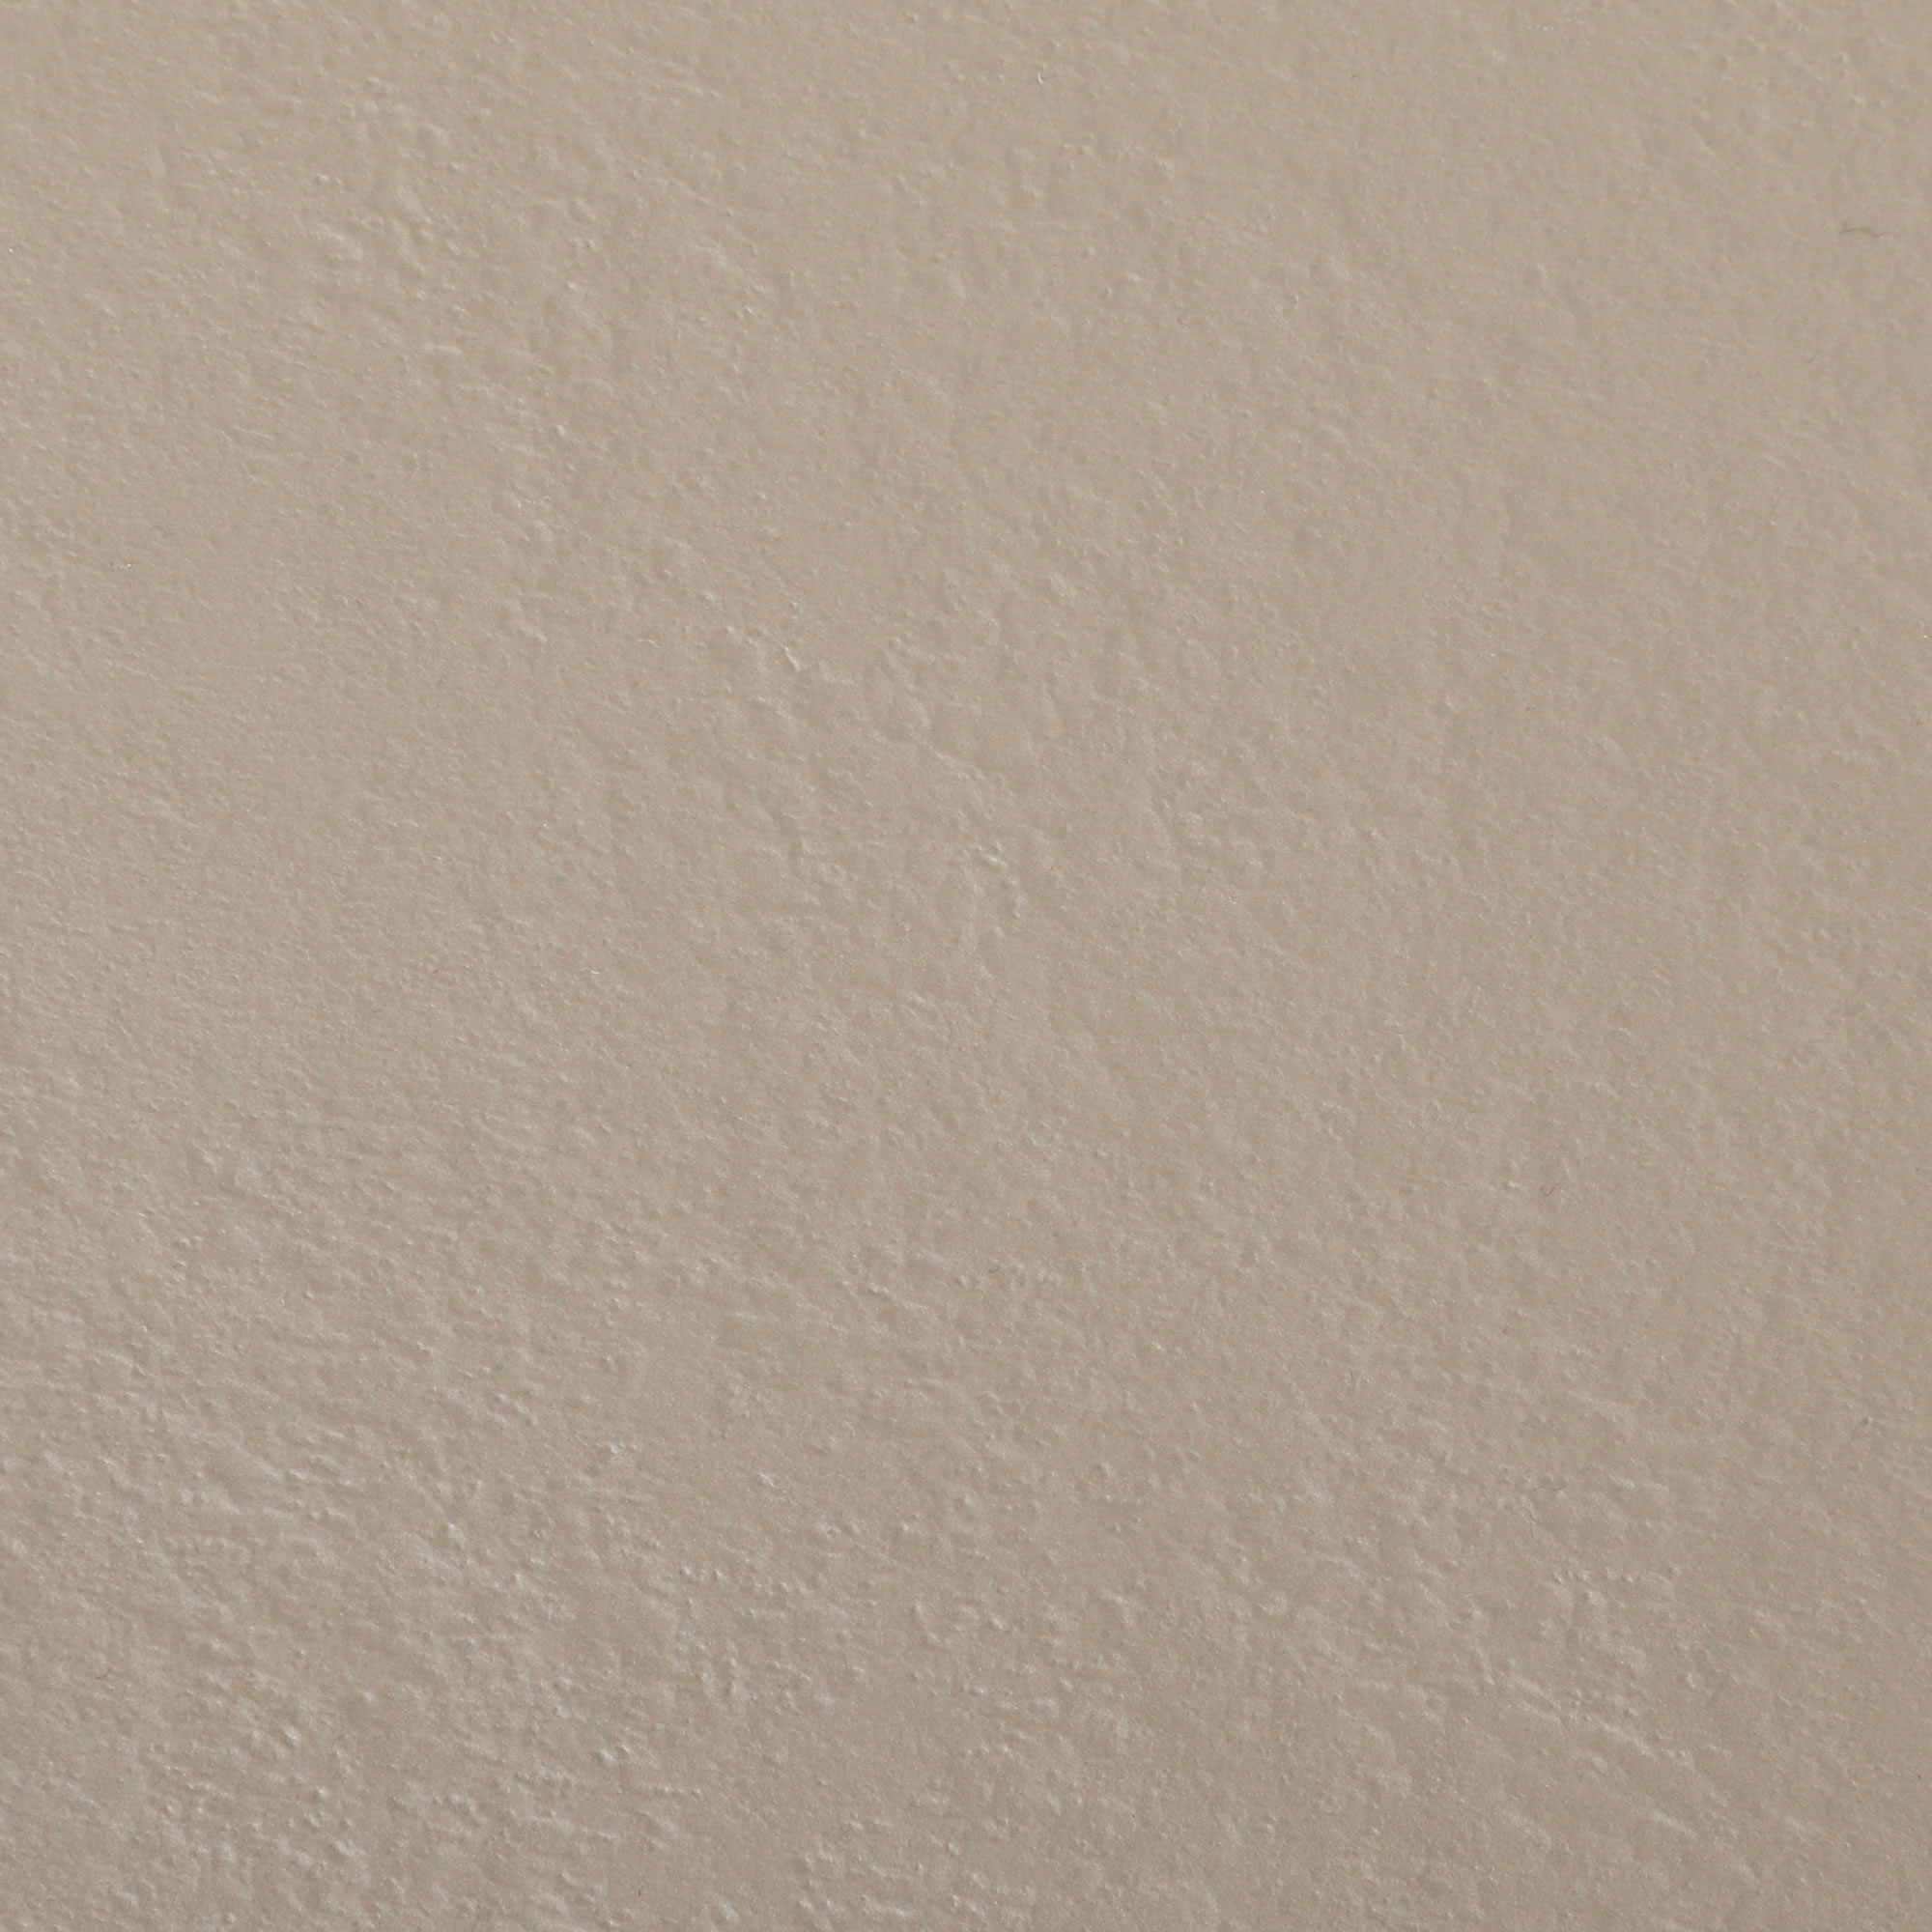 Стол Drigani Dakota double 100x60 см, цвет чёрный - фото 6